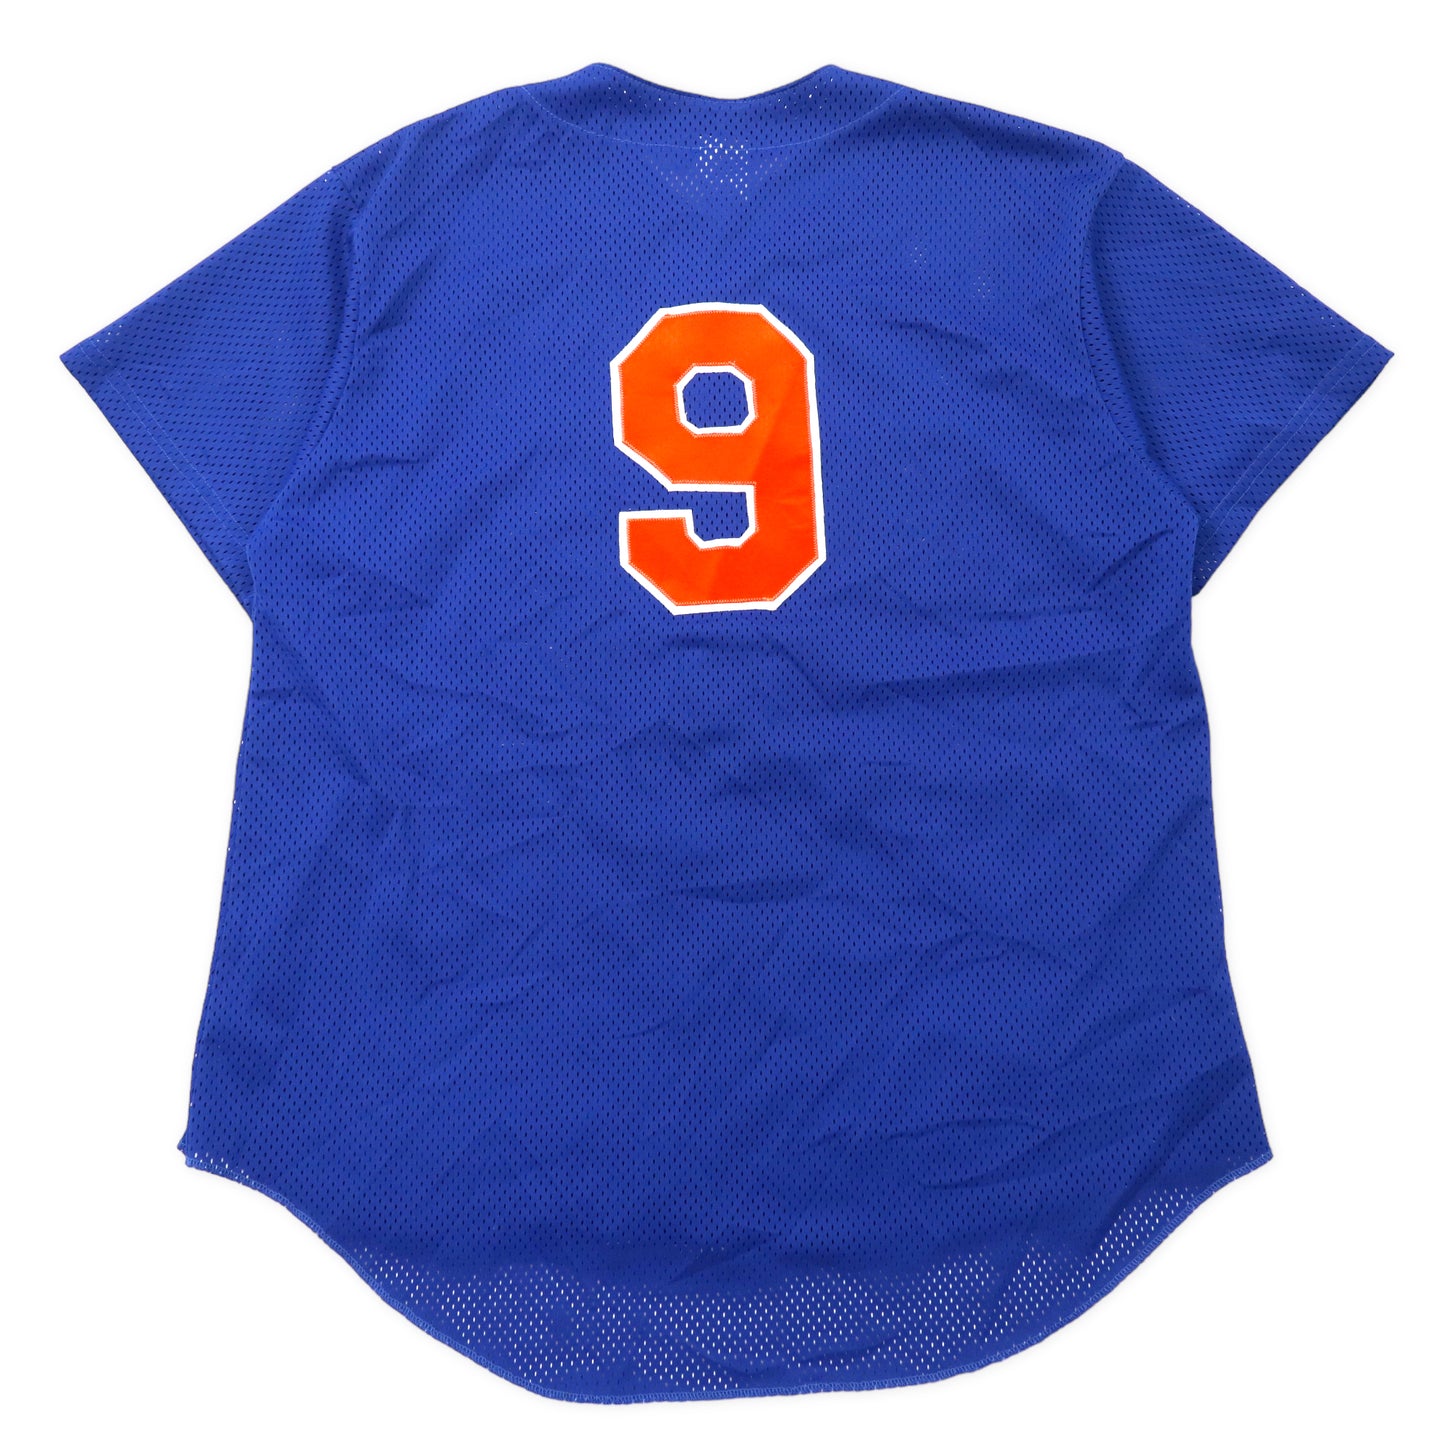 Don Alleson Athletic USA製 ベースボールシャツ ゲームシャツ XL ブルー ポリエステル メッシュ ナンバリング ビッグサイズ